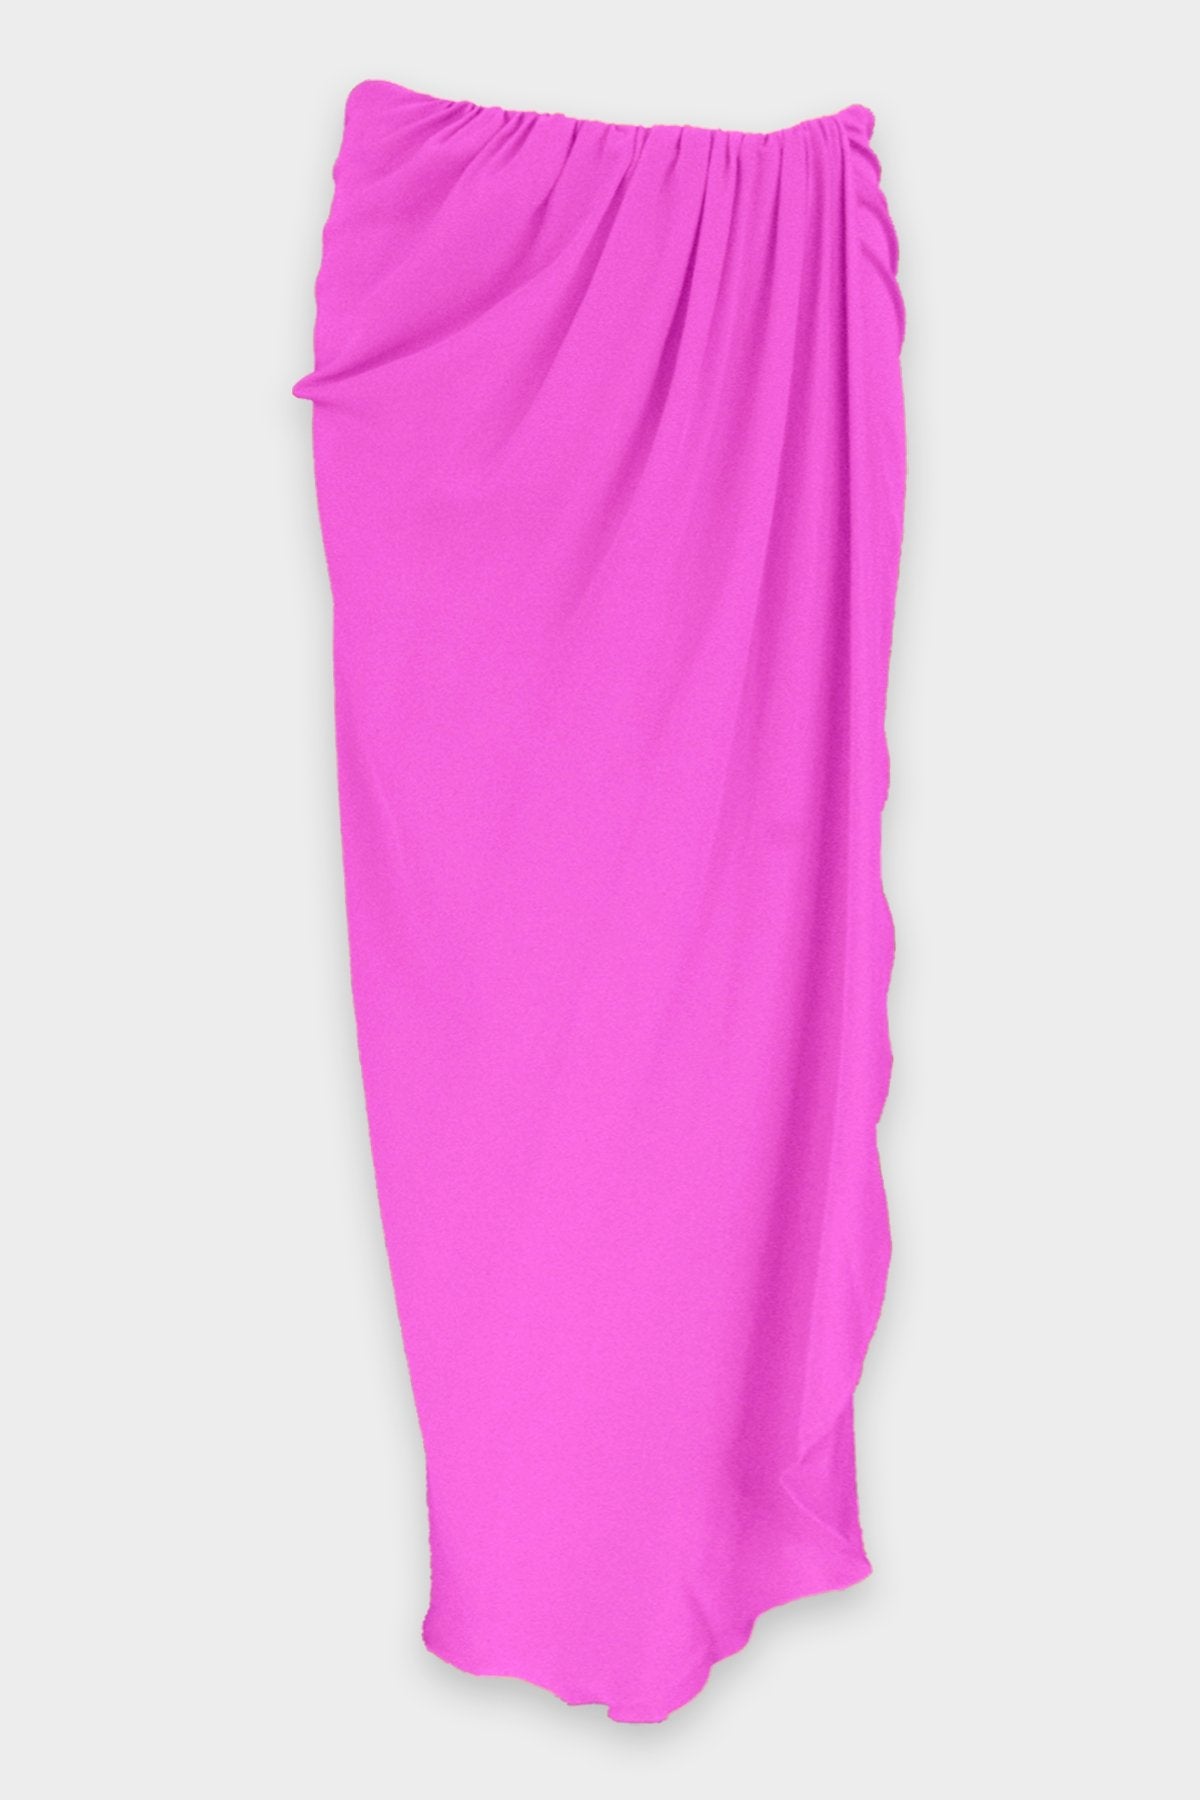 Draped Skirt in Fuchsia - shop-olivia.com